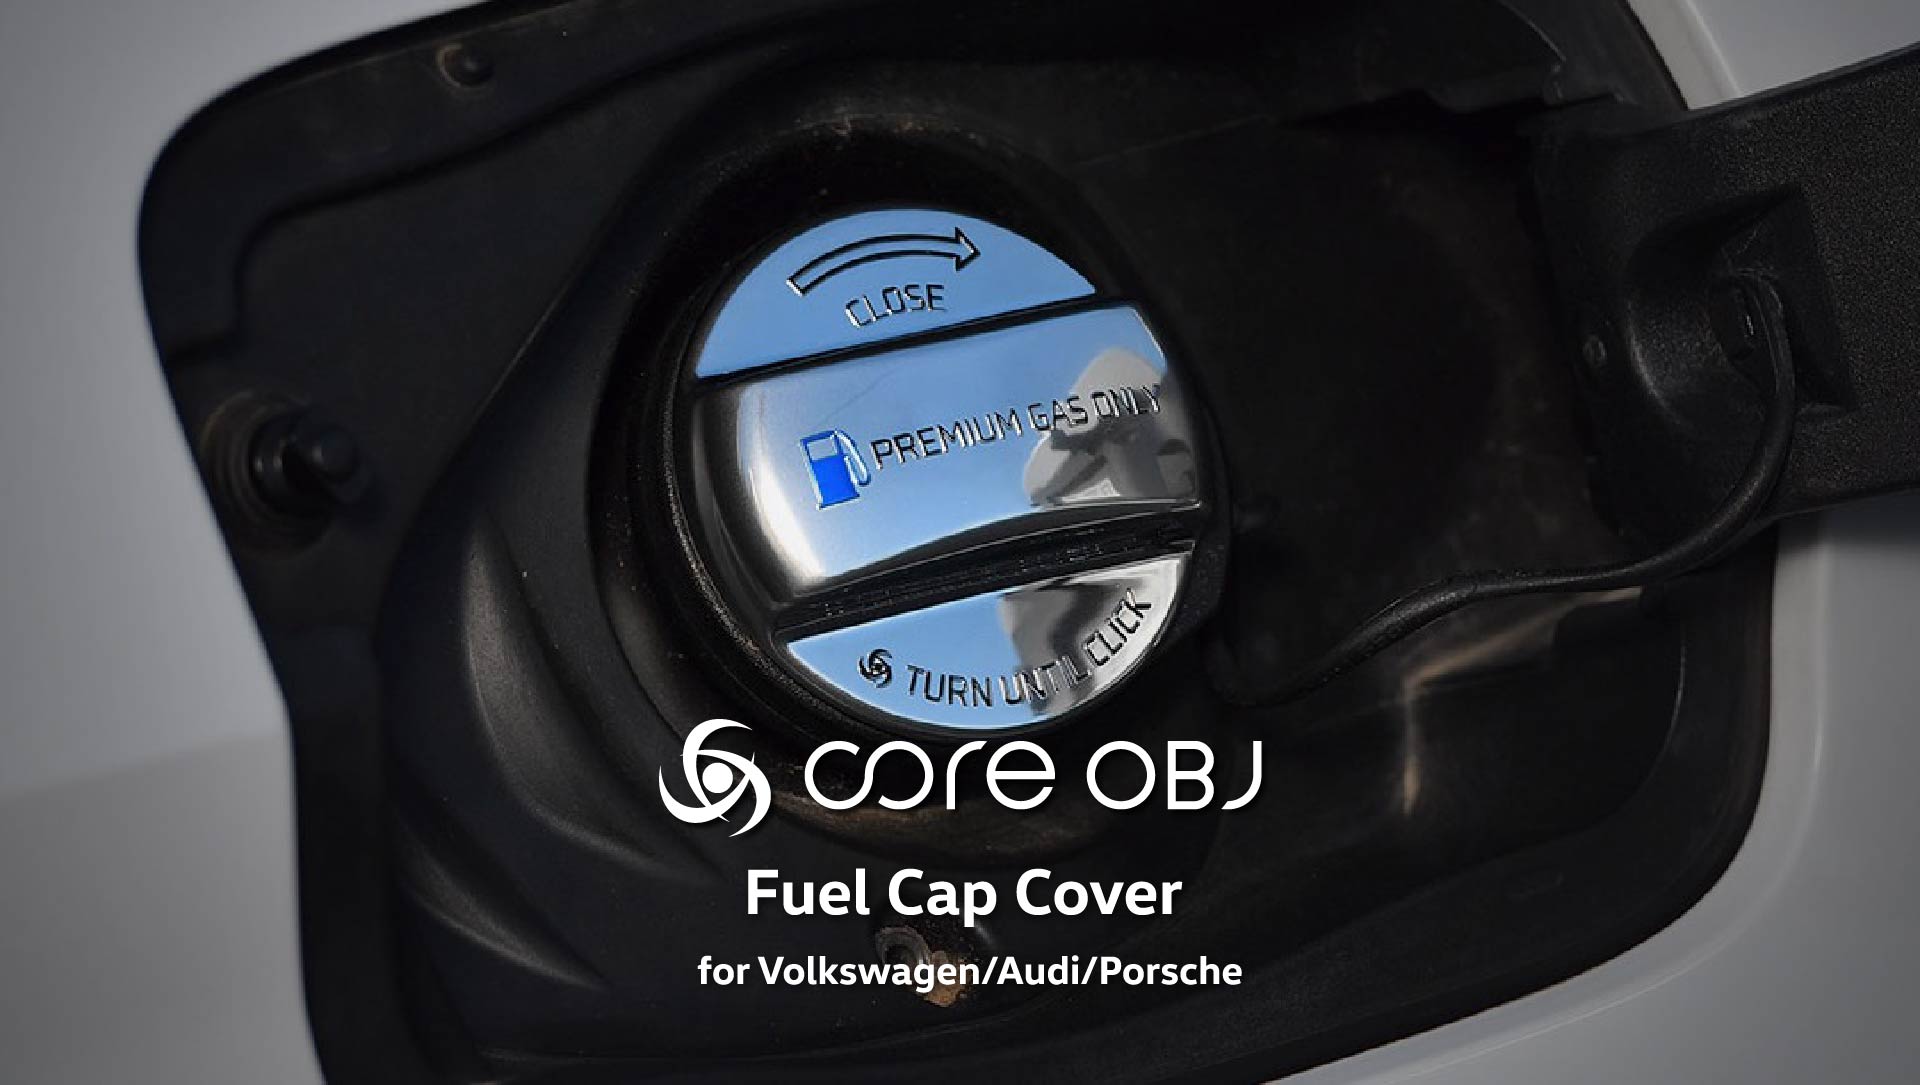 Fuel Cap Cover for Volkswagen/Audi/Porsche / core obj